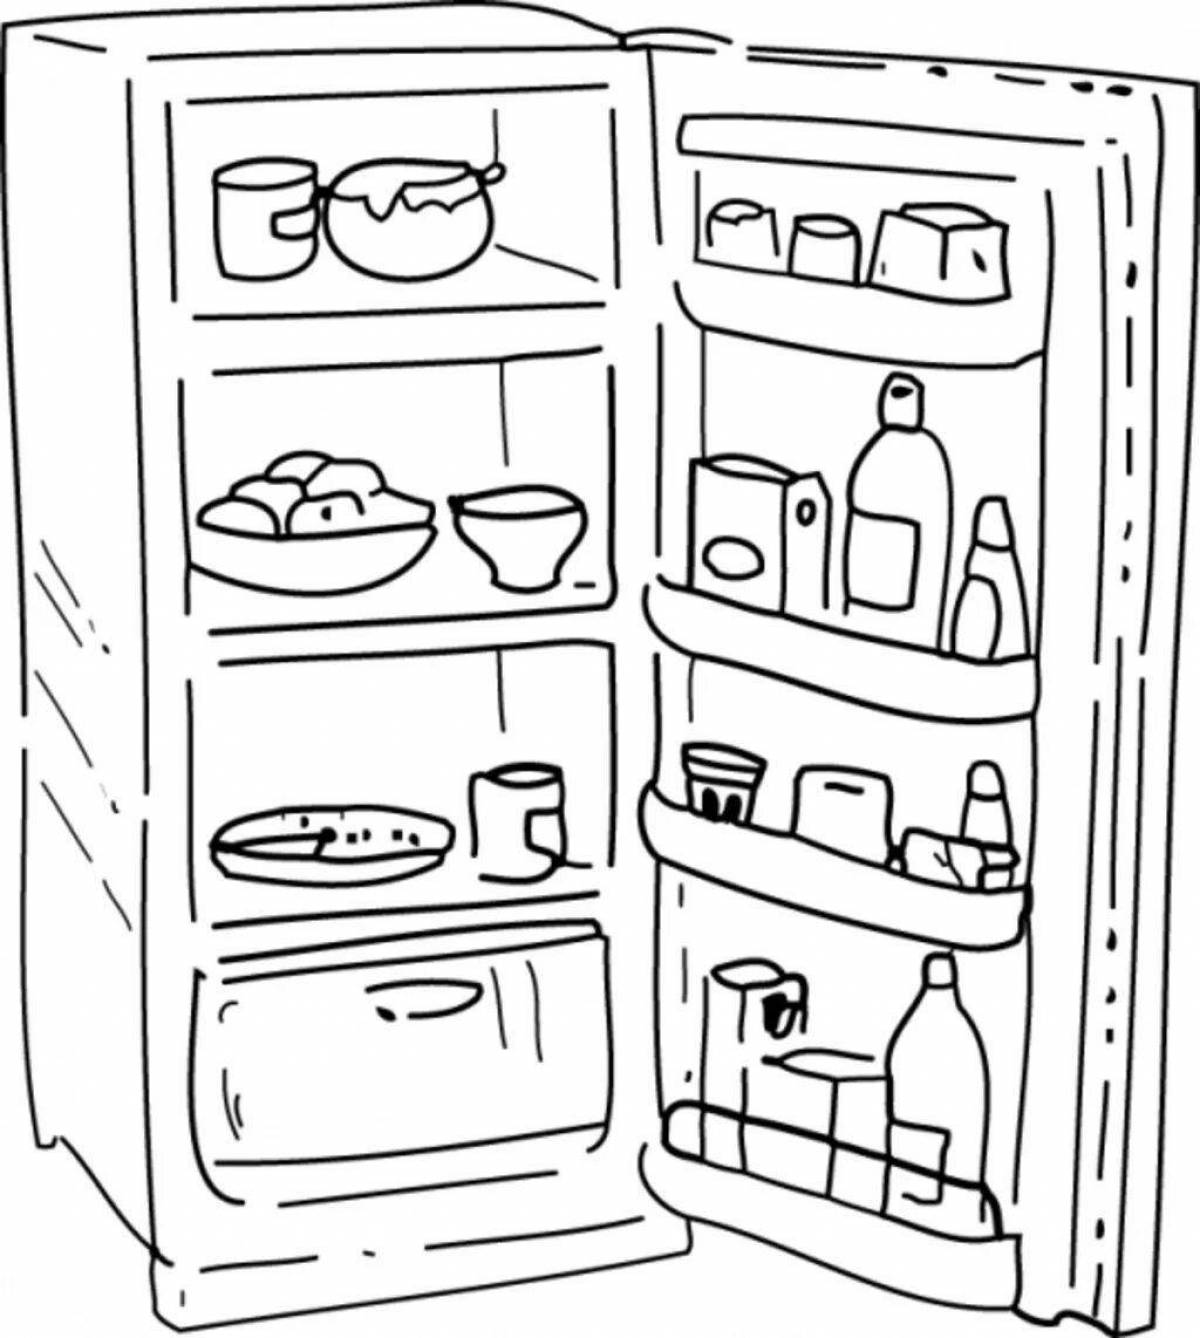 Fun fridge open coloring page